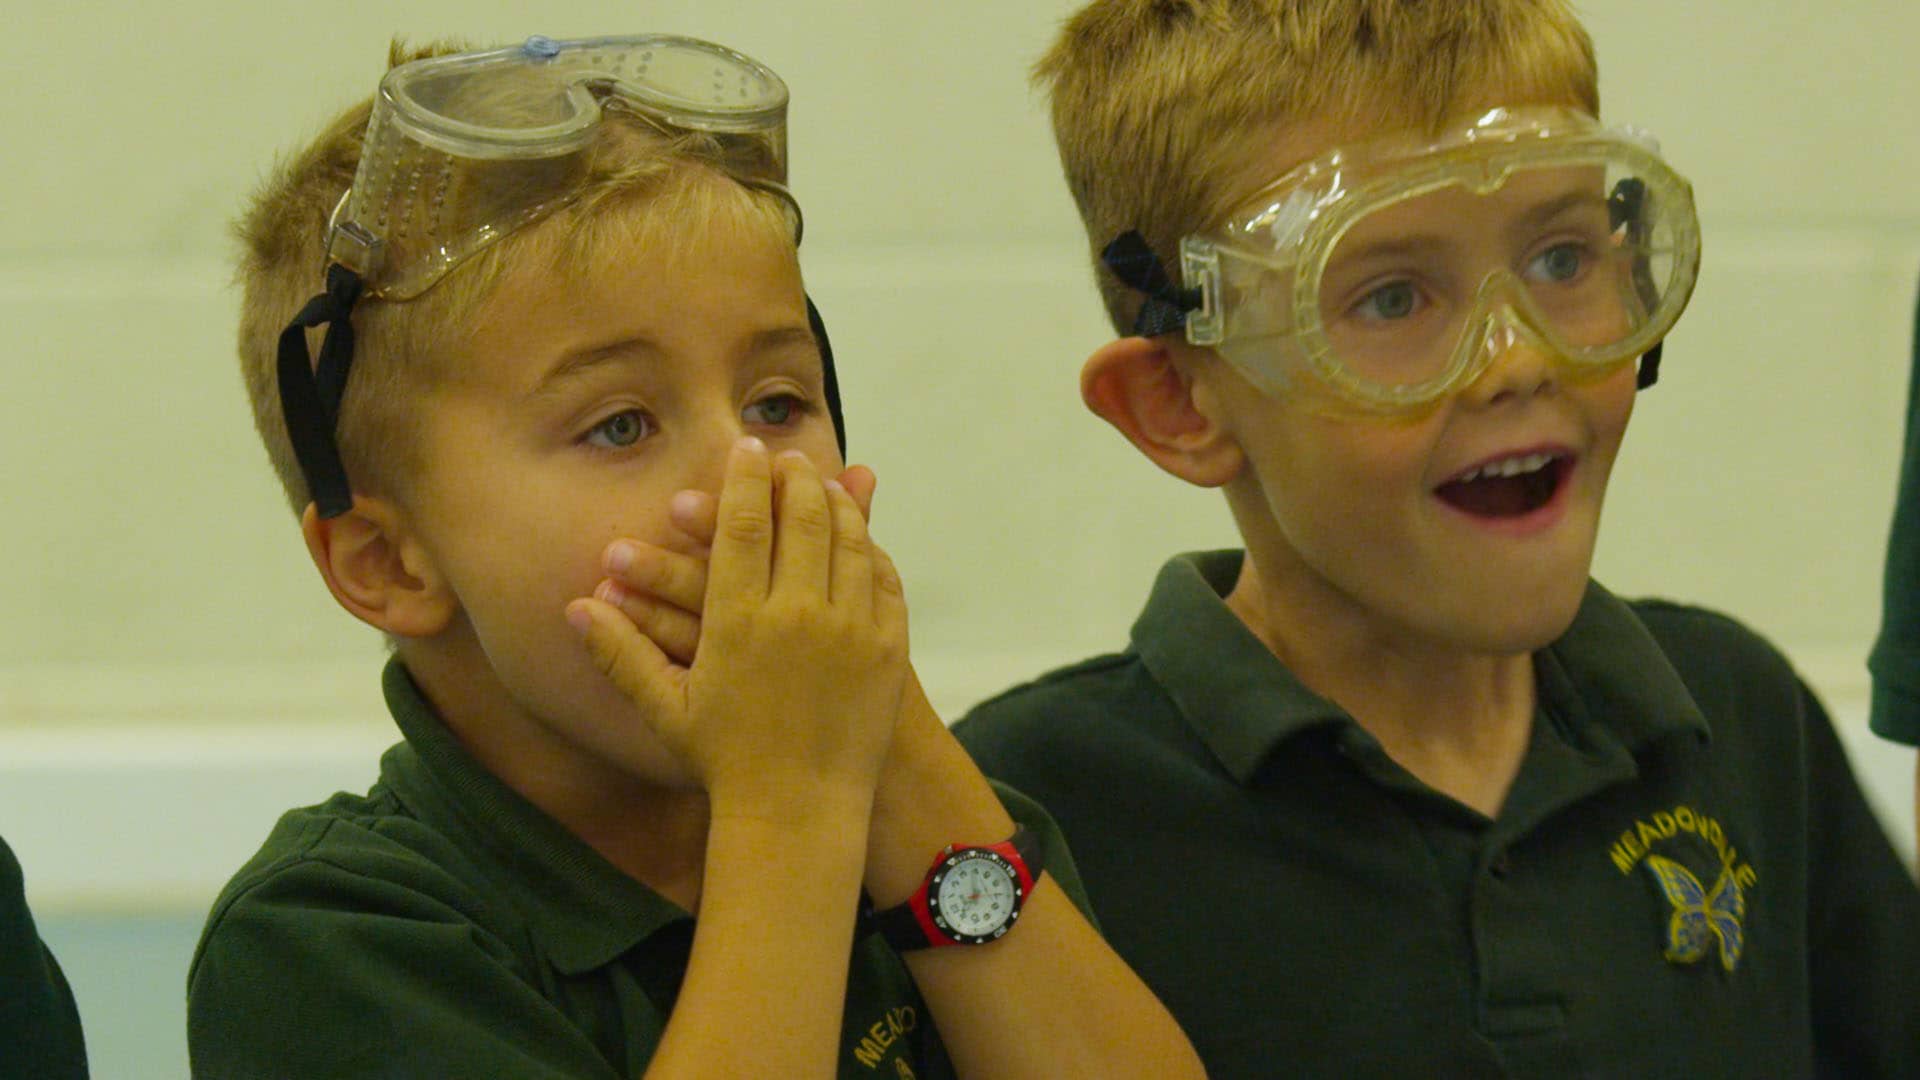 Children watching science experiment